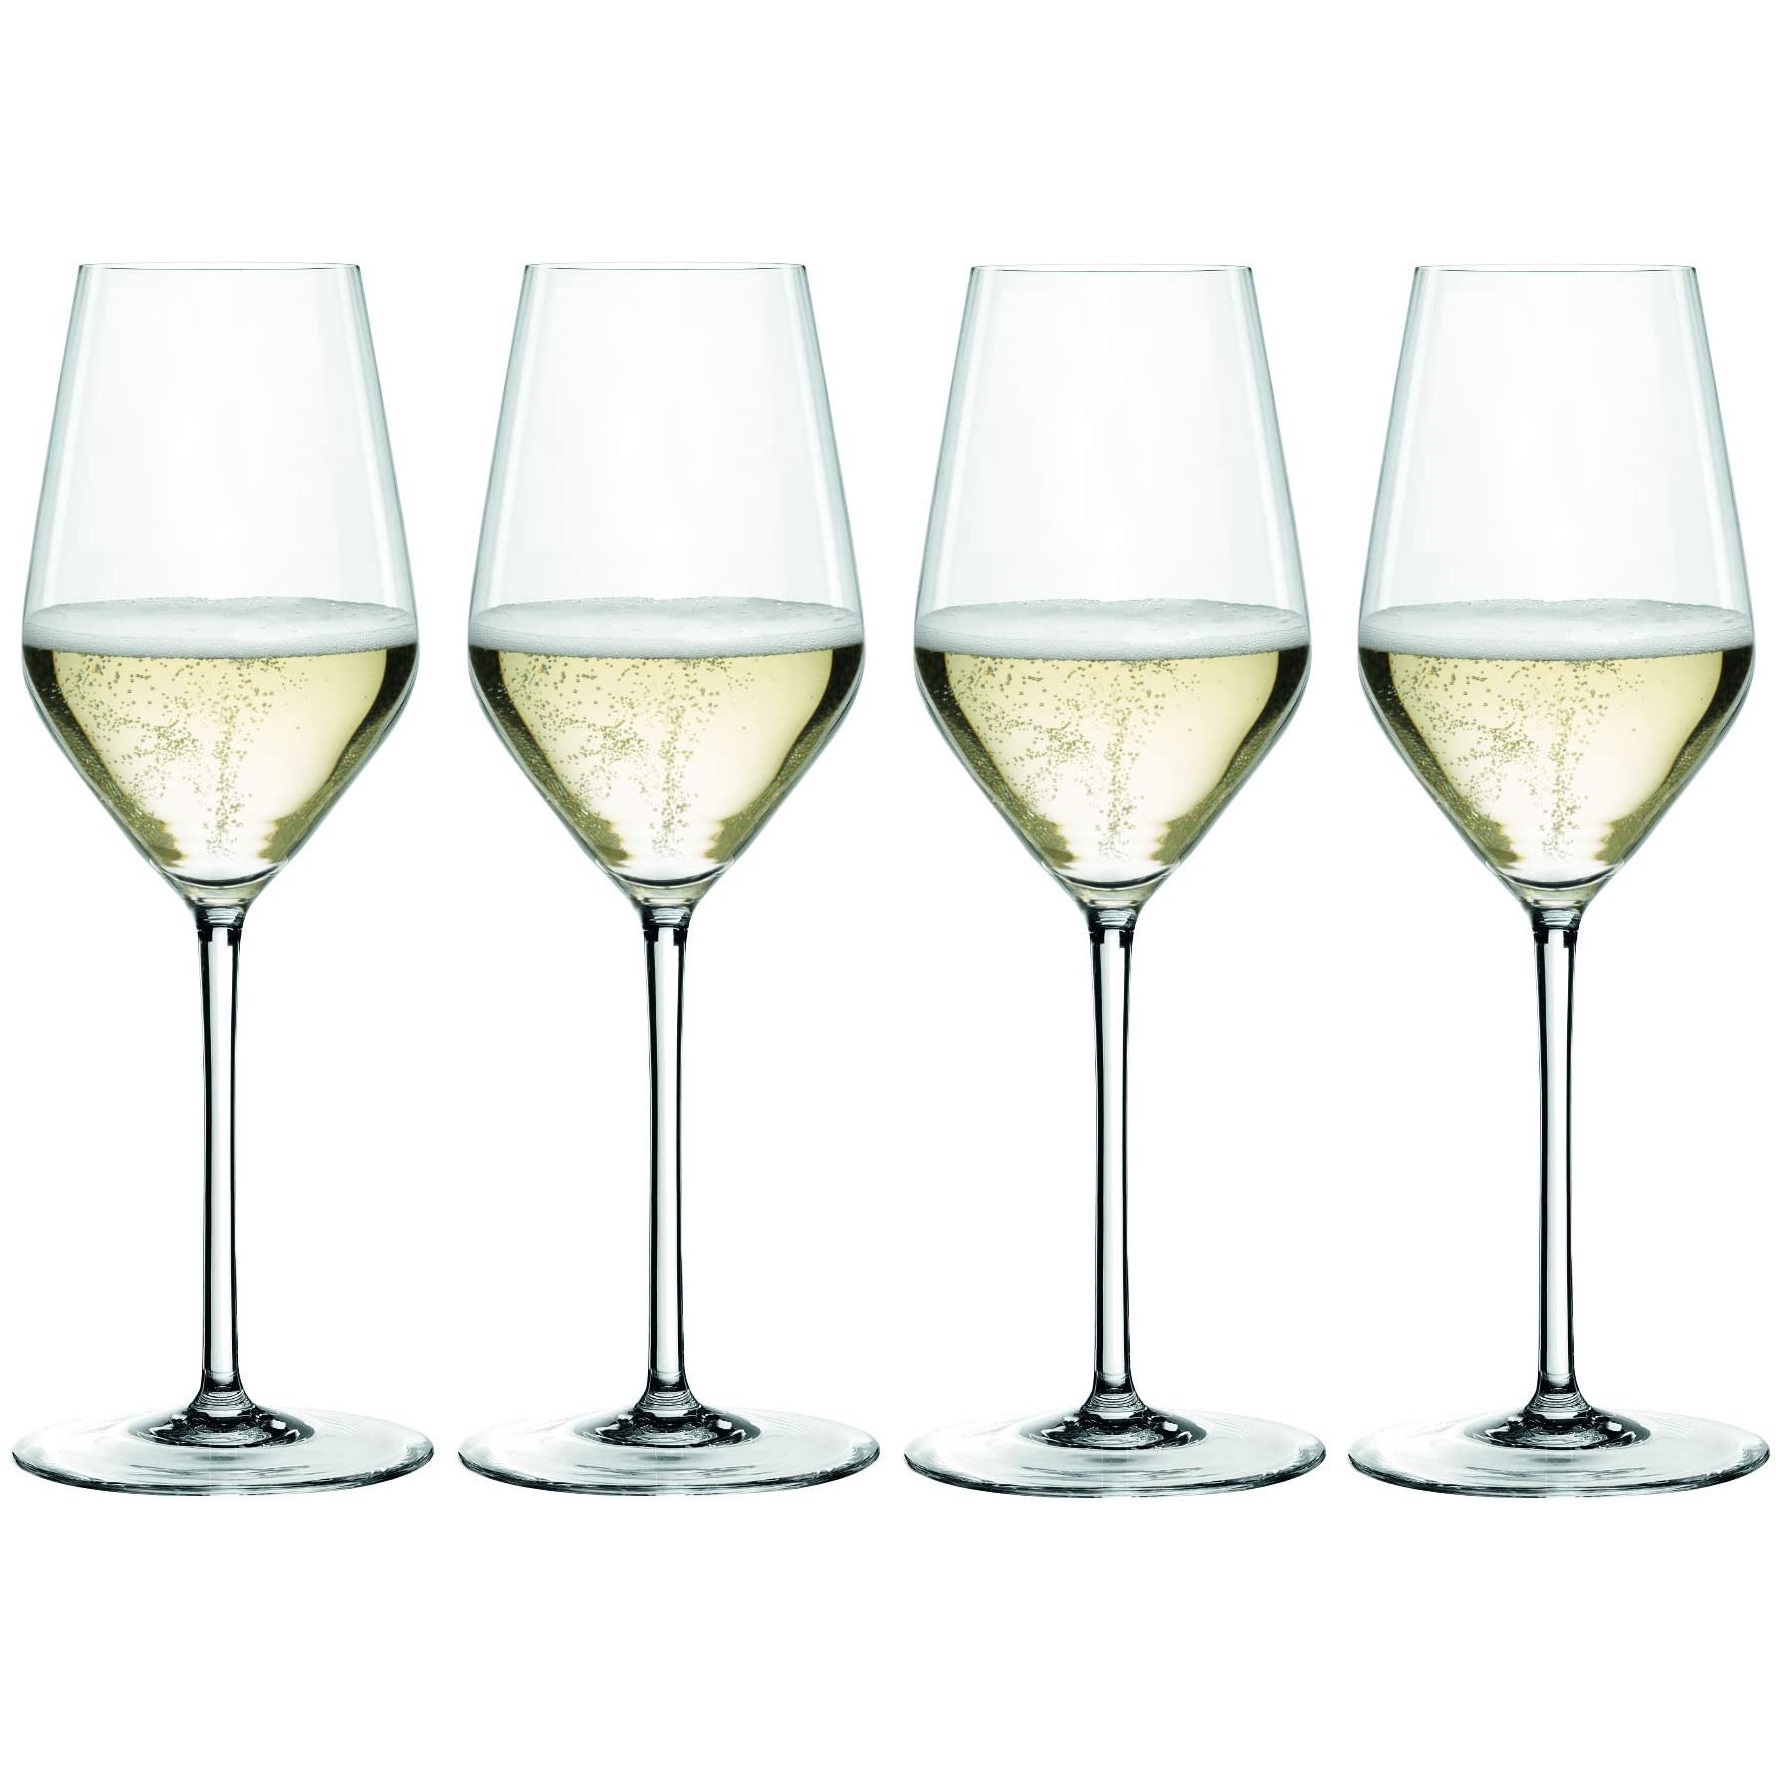 4 бокала для шампанского Spiegelau Style Champagne Glass 310 мл (арт. 4670185)